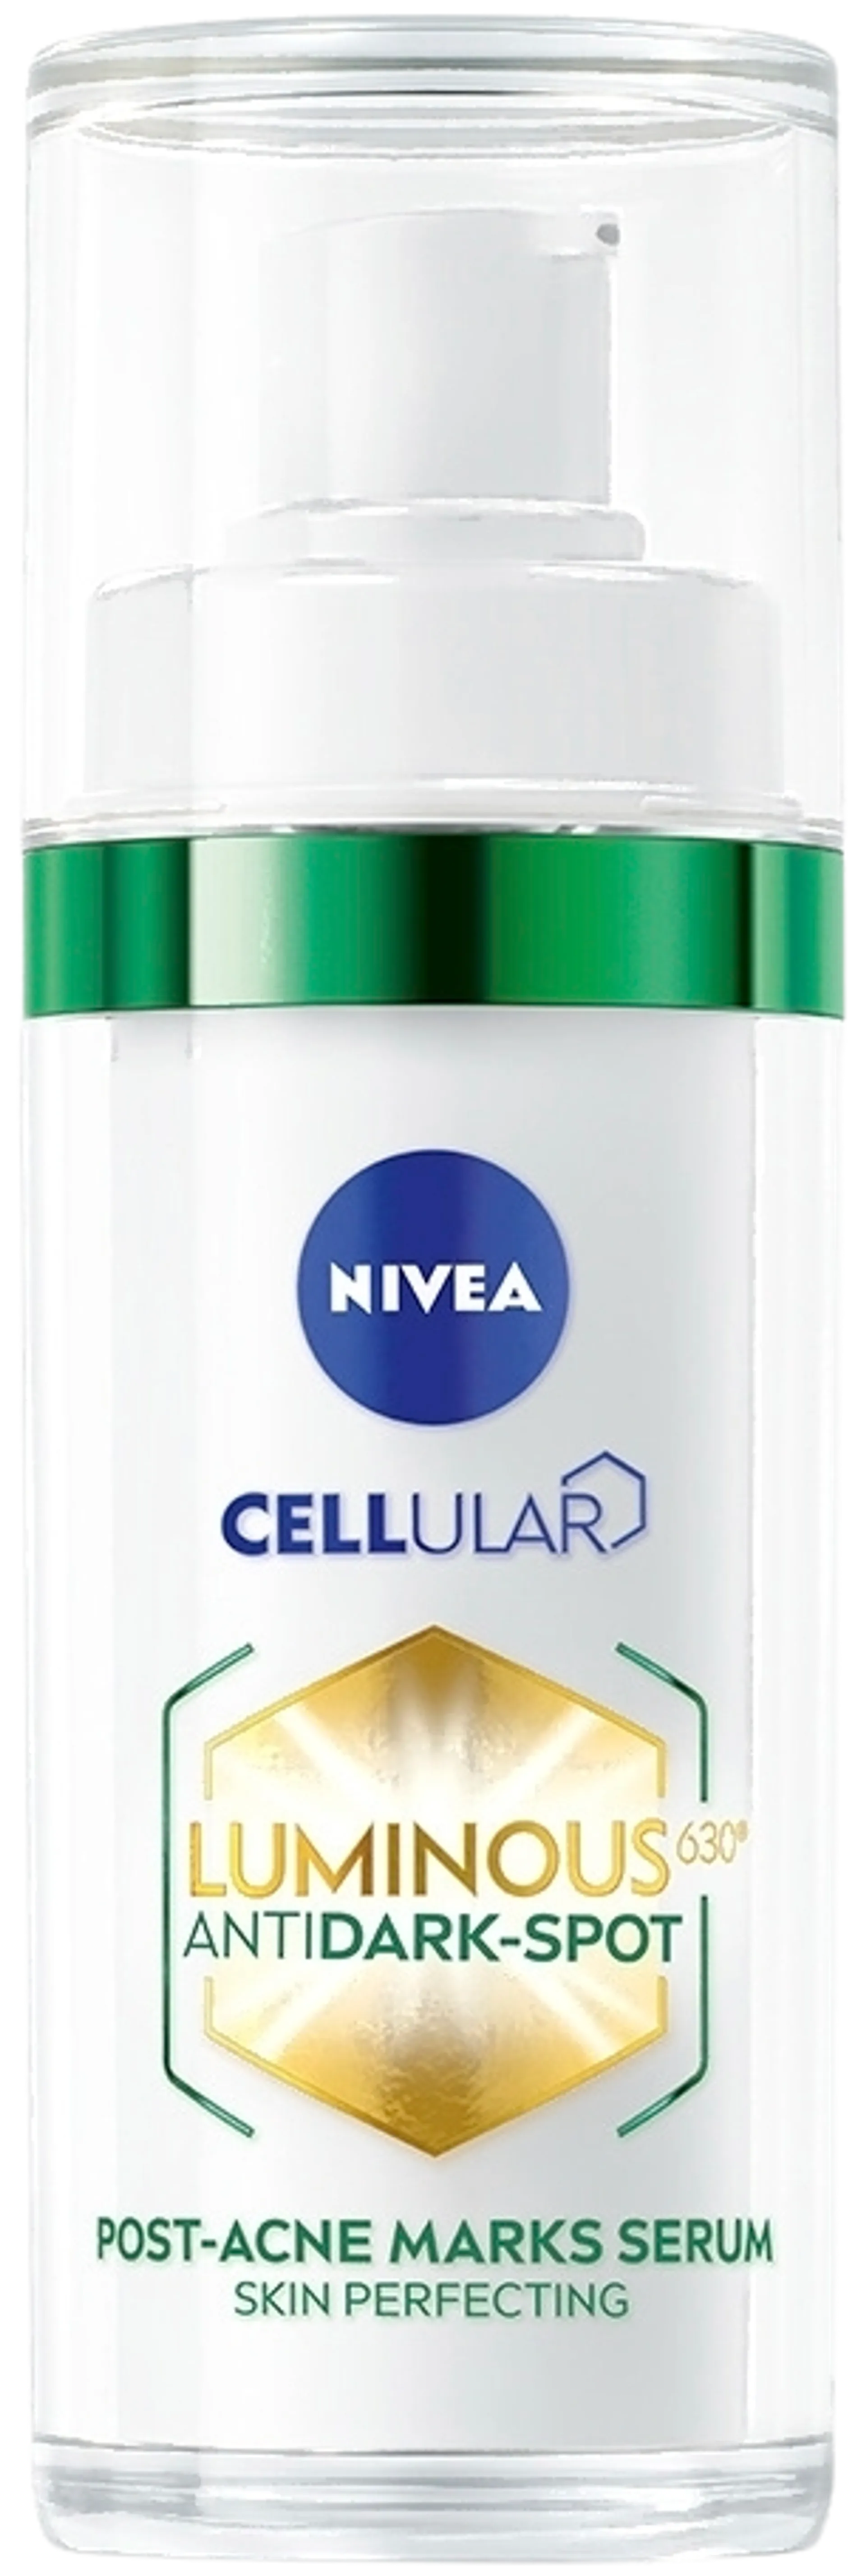 NIVEA 30ml Cellular Luminous630 Post-Acne Marks Serum -kasvoseerumi - 2